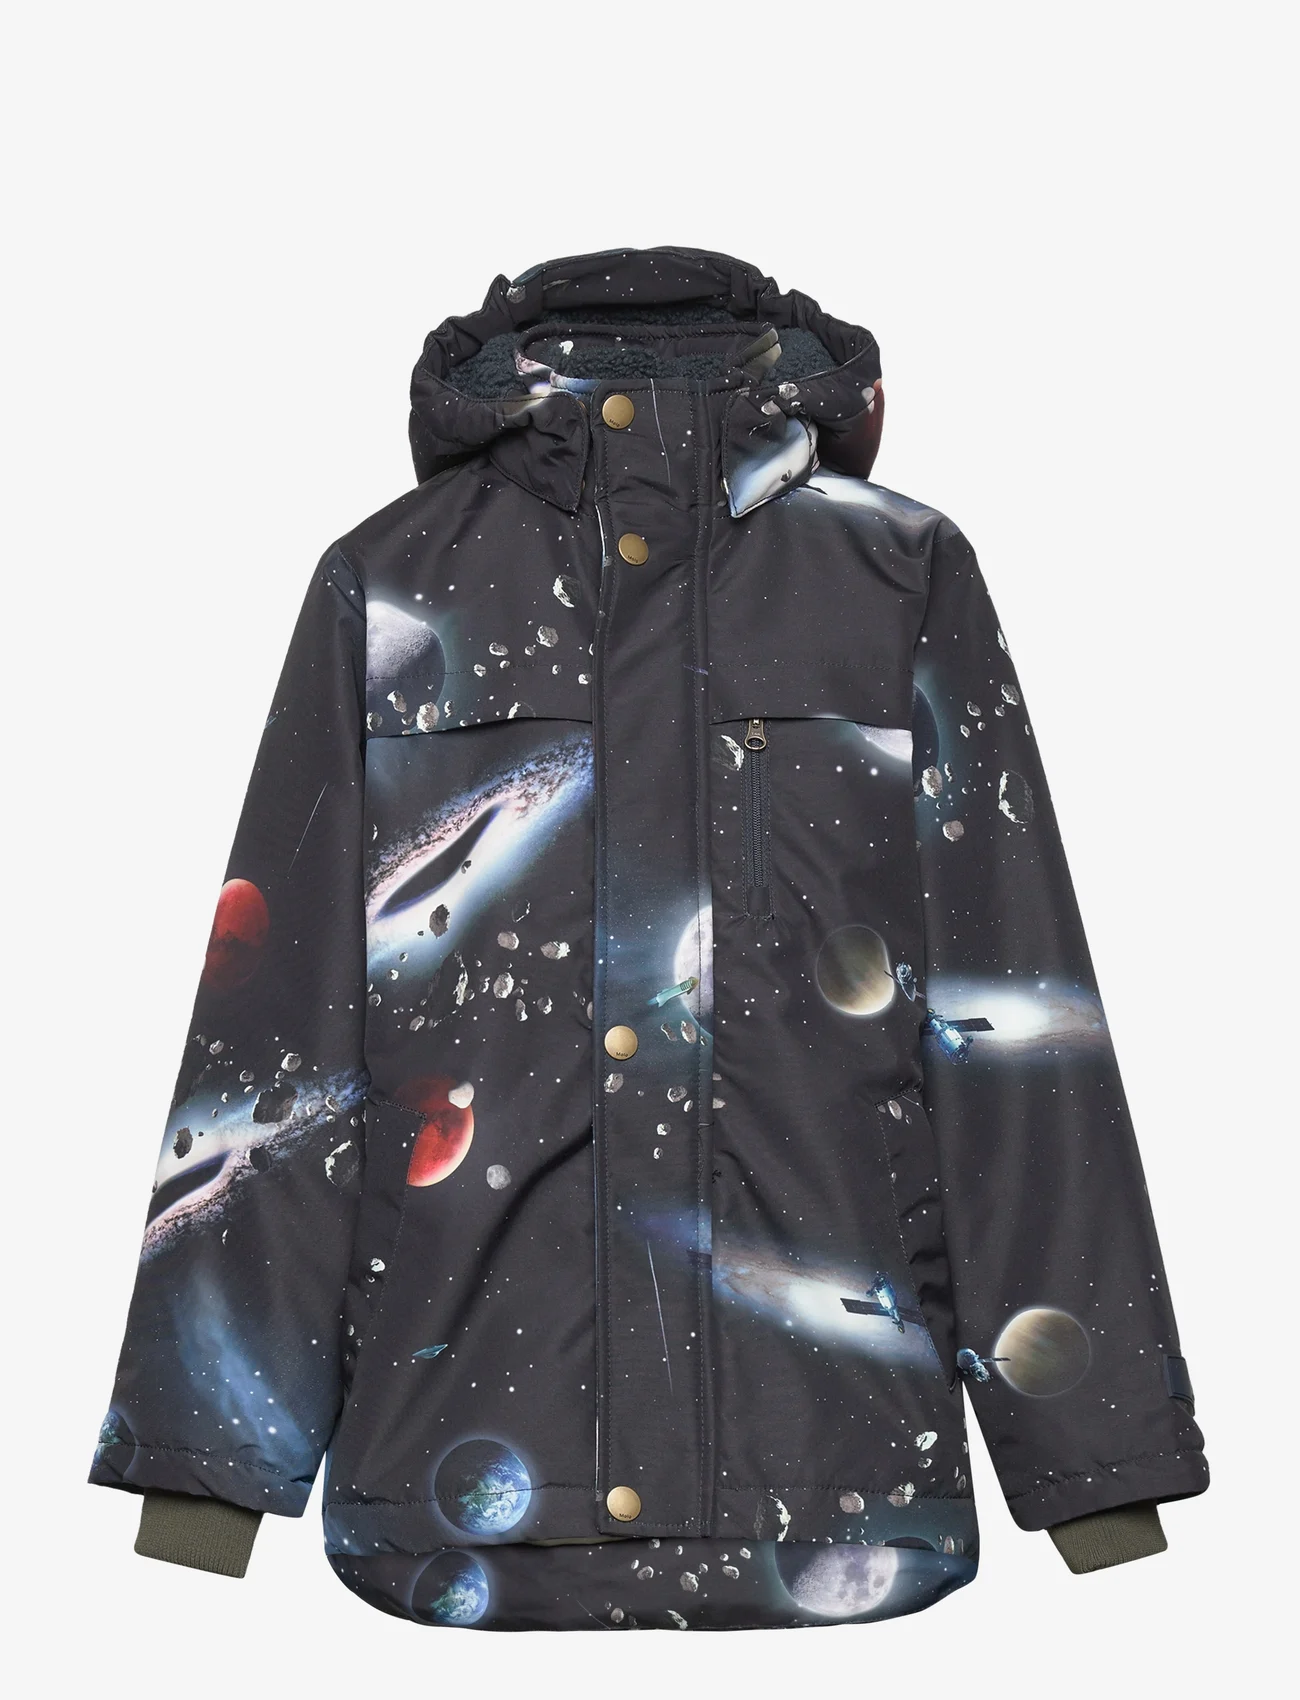 Molo - Heiko - winter jackets - into space - 0